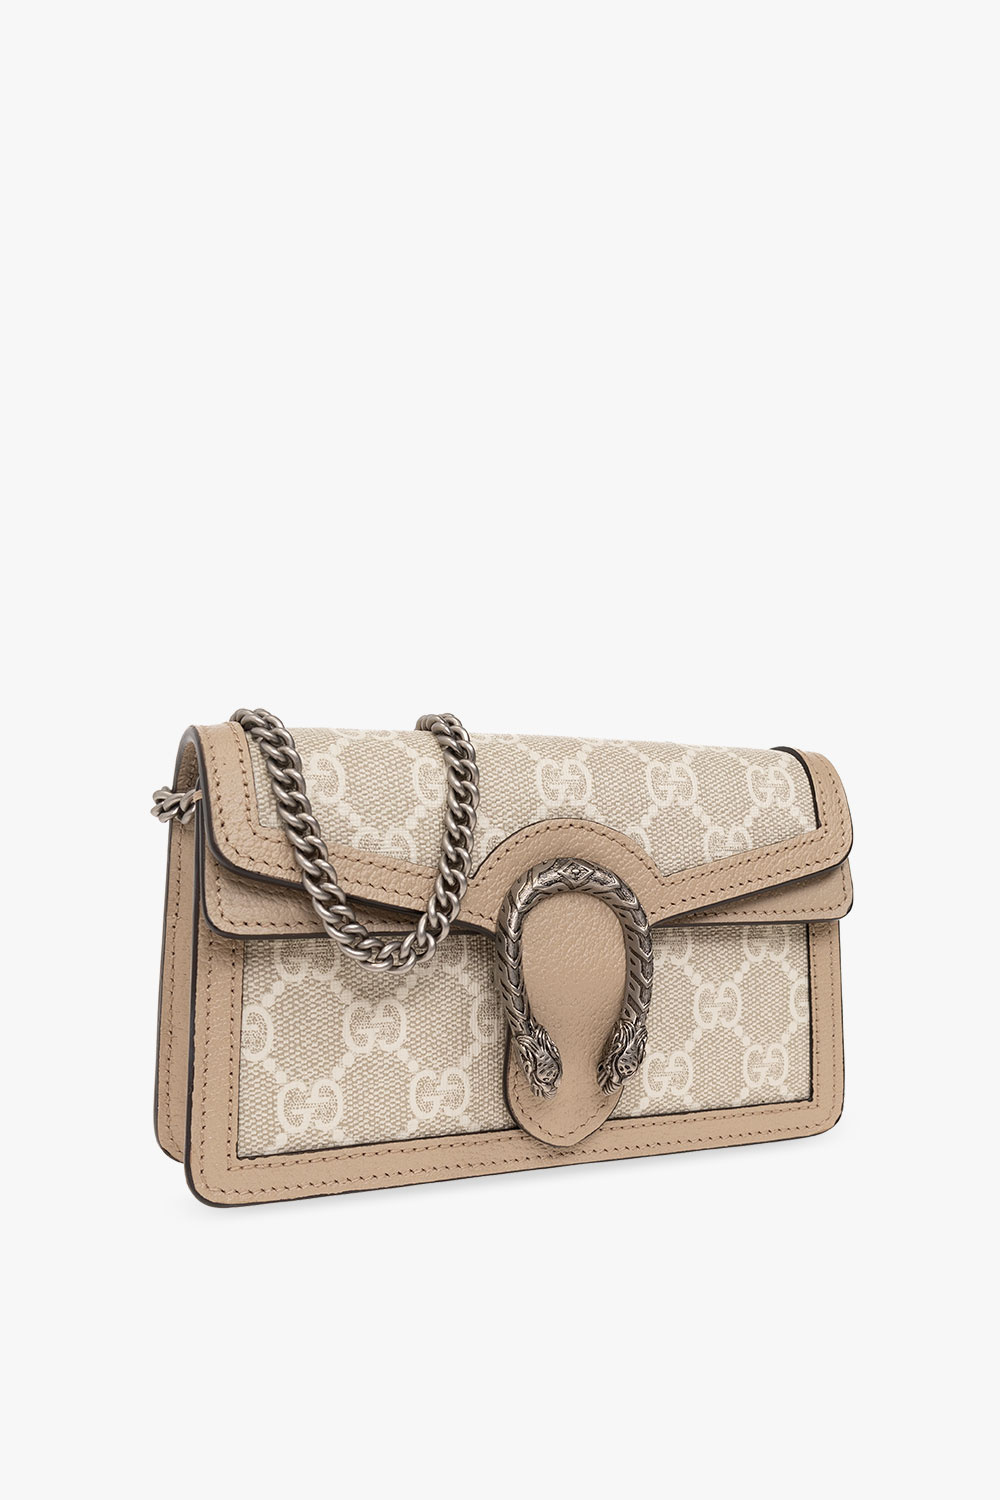 Gucci Dionysus Super Mini Crossbody Bag for Women